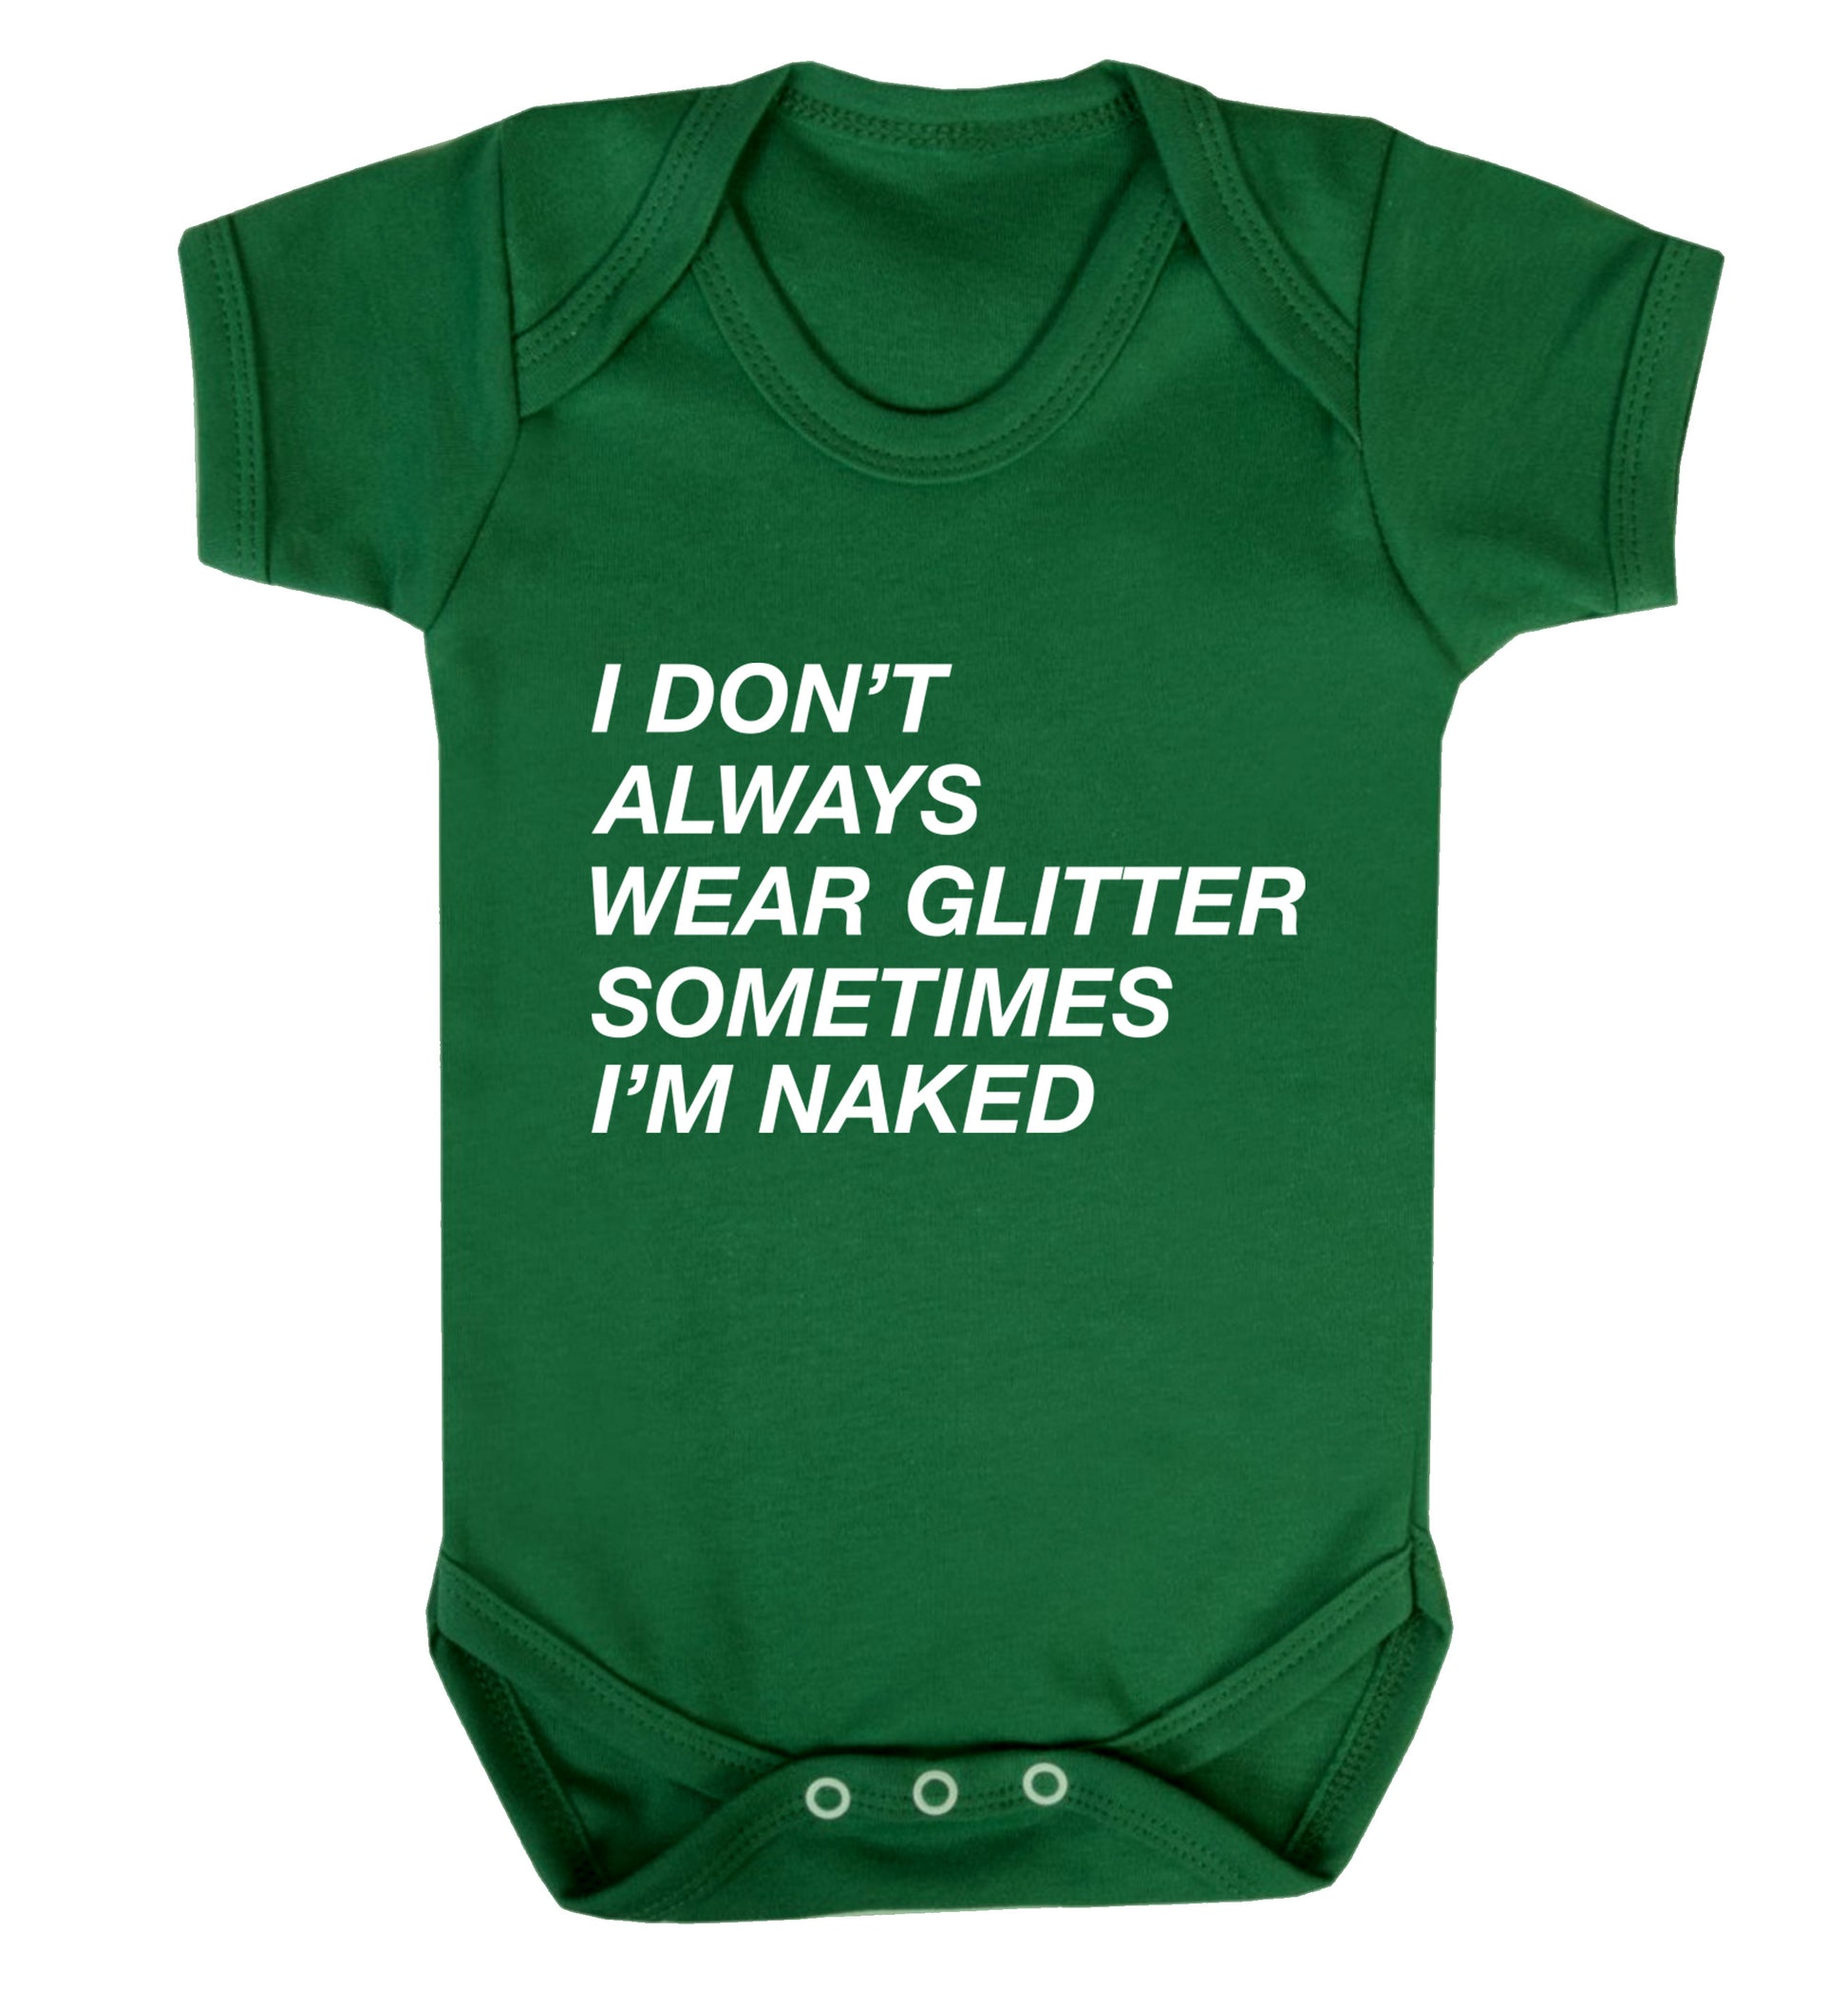 I don't always wear glitter sometimes I'm naked! Baby Vest green 18-24 months